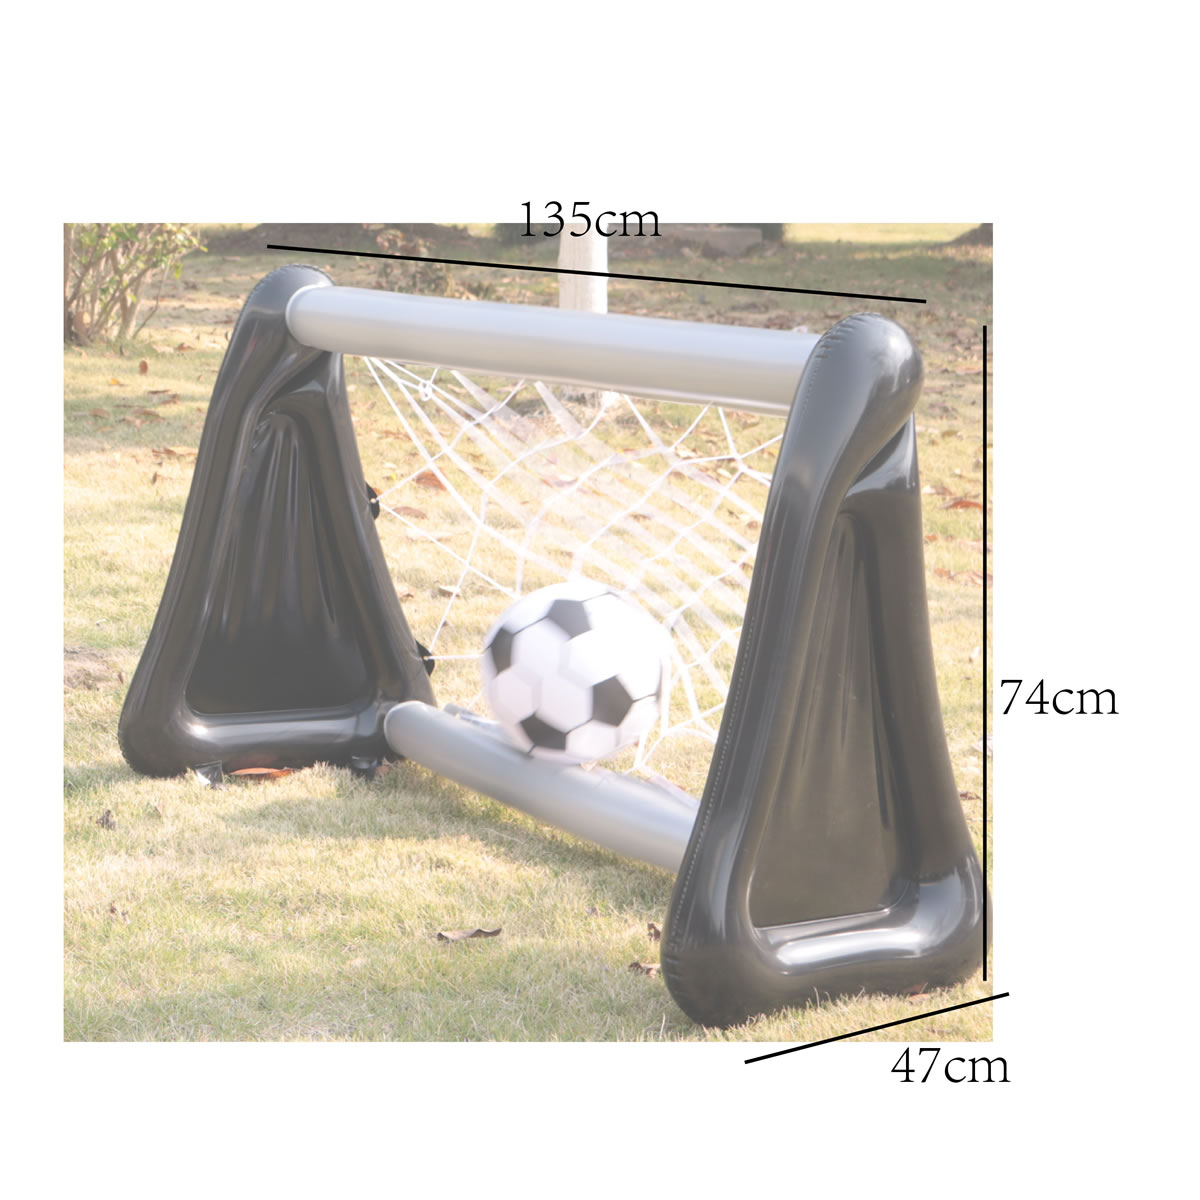 Football door frame sizes